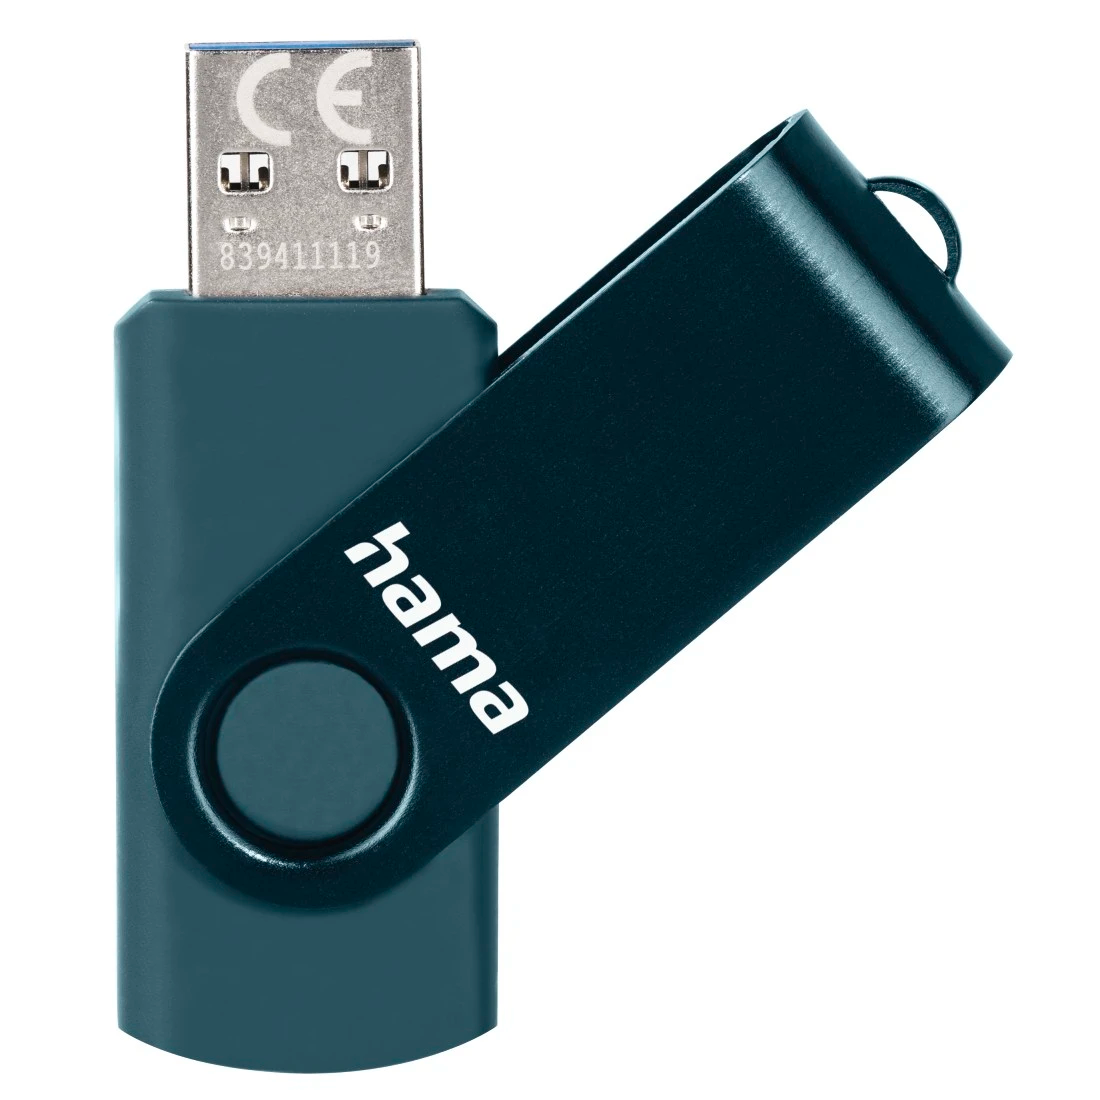 Hama Rotate USB 3.0 256GB USB Memory Stick - Blue | 435927 from Hama - DID Electrical